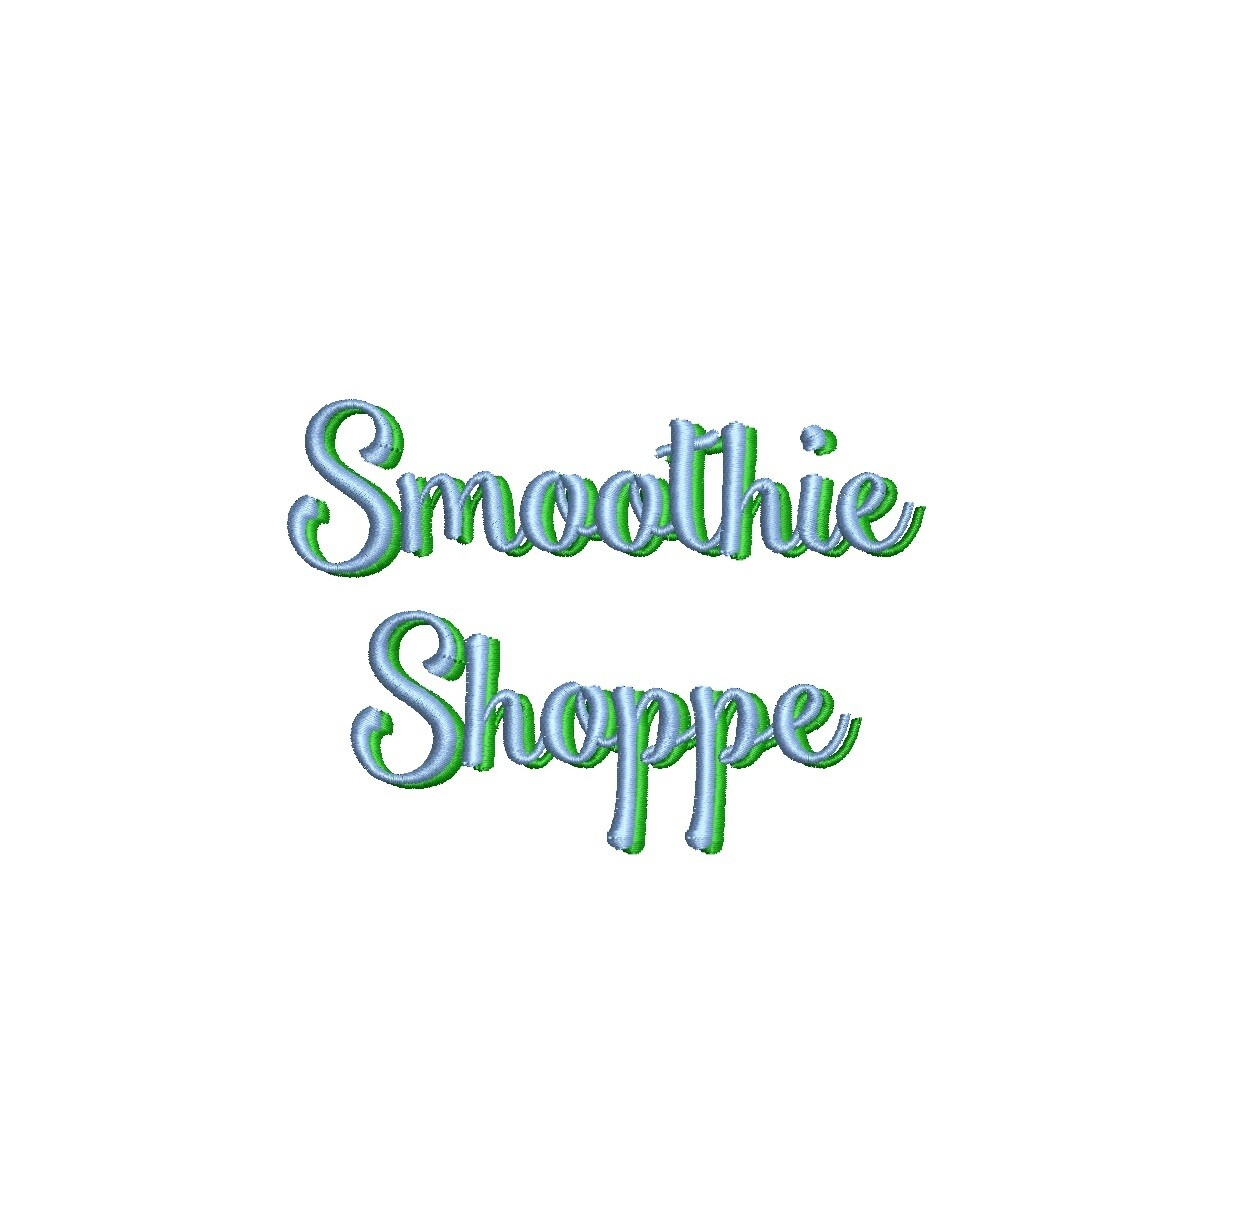 Smoothie Shoppe Shadow ESA font